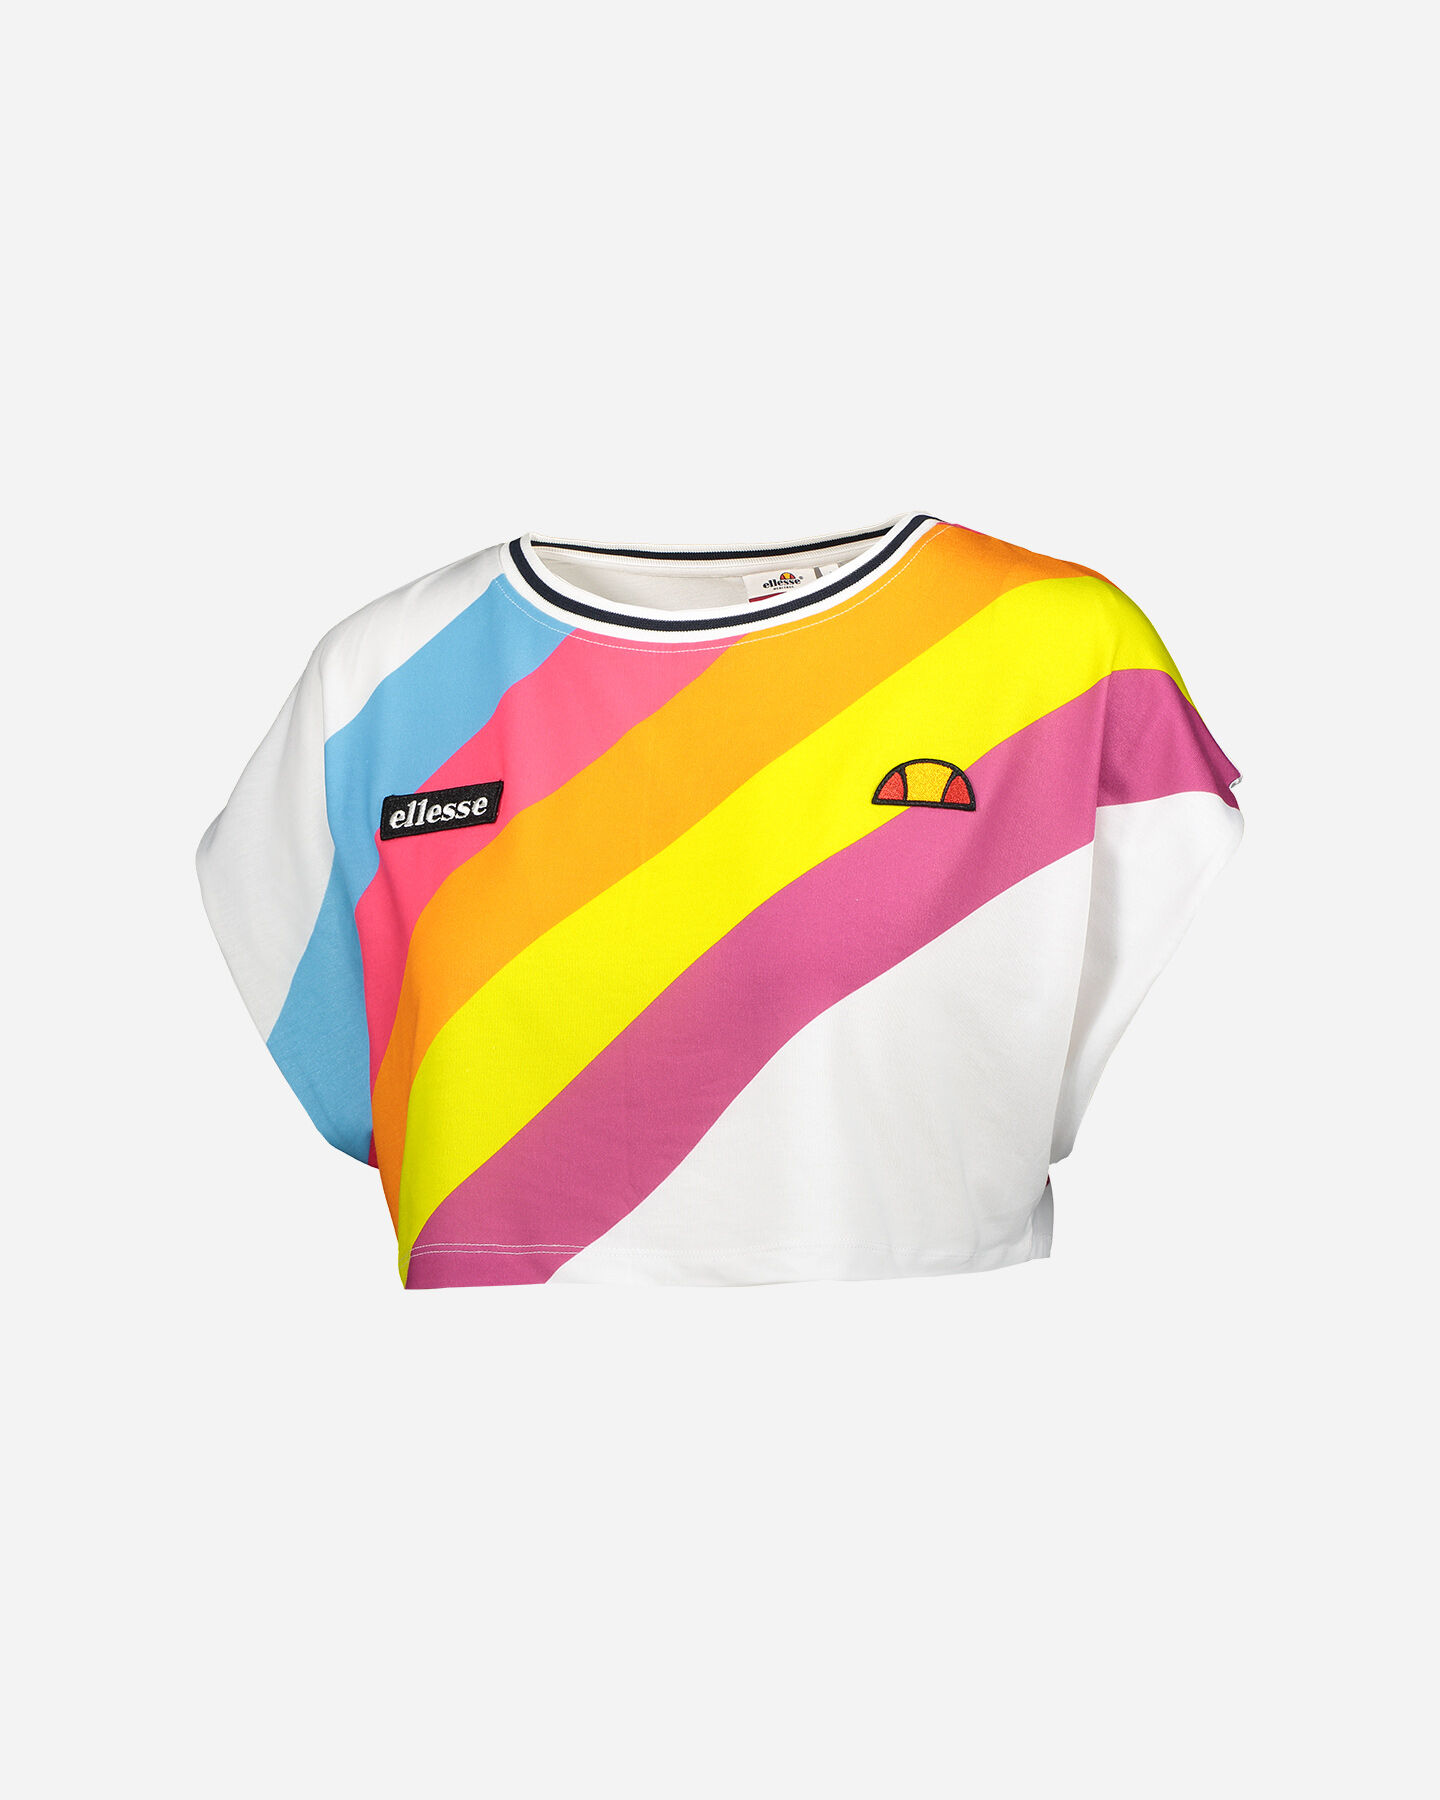  T-Shirt ELLESSE RAINBOW W S4074588|001|XS scatto 0